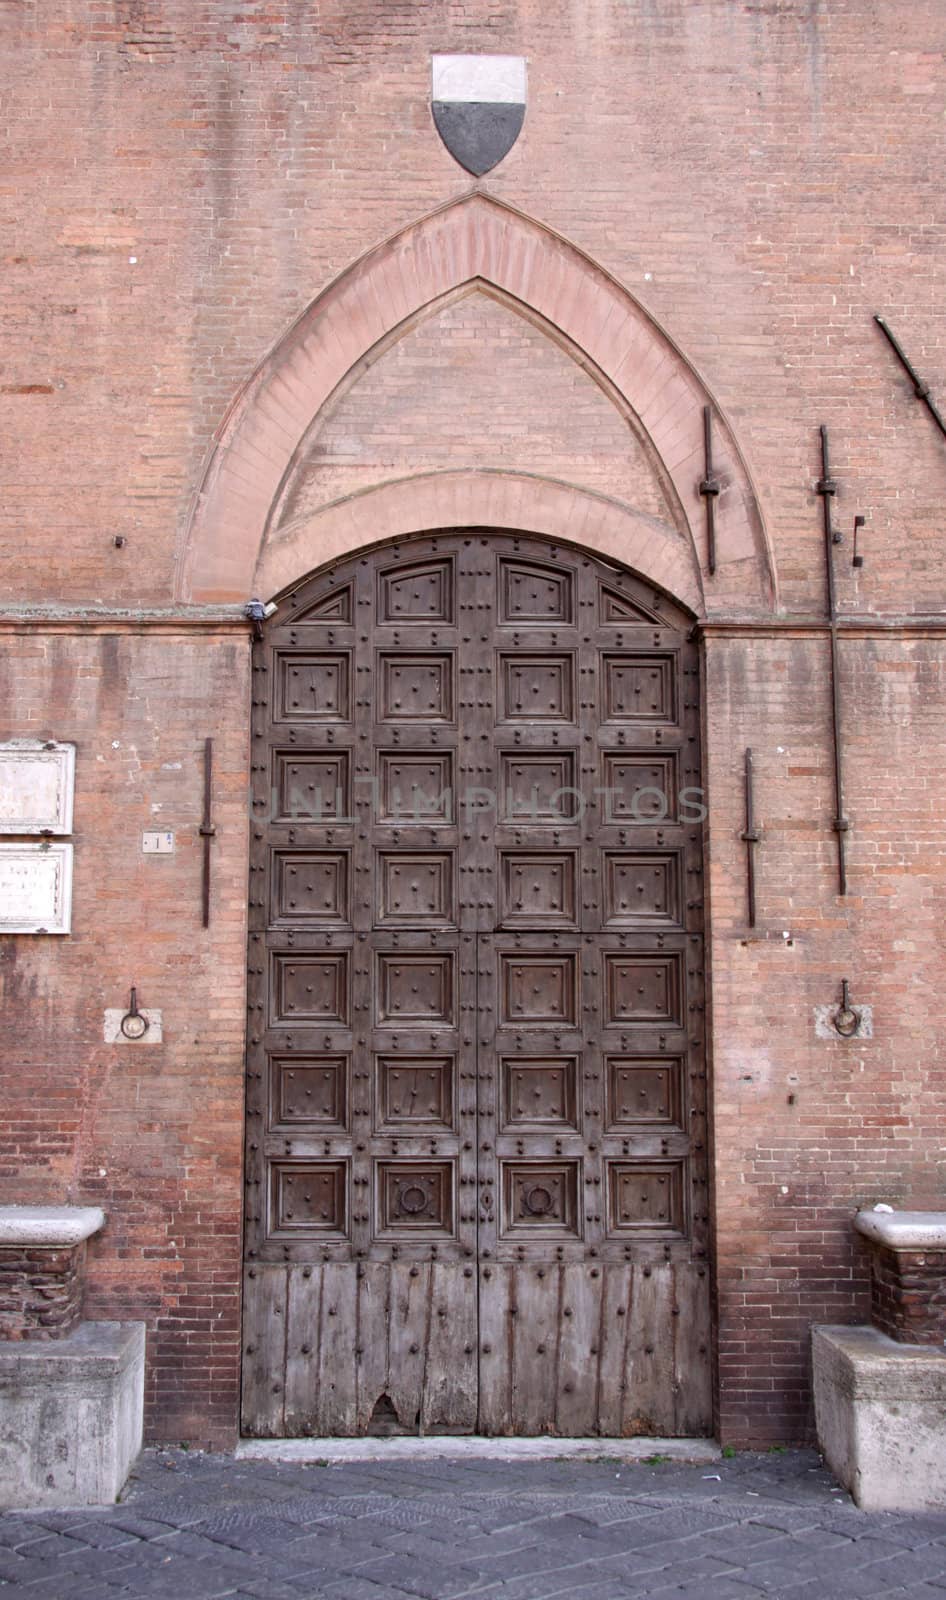 An old medieval door in the Italian town of Siena.